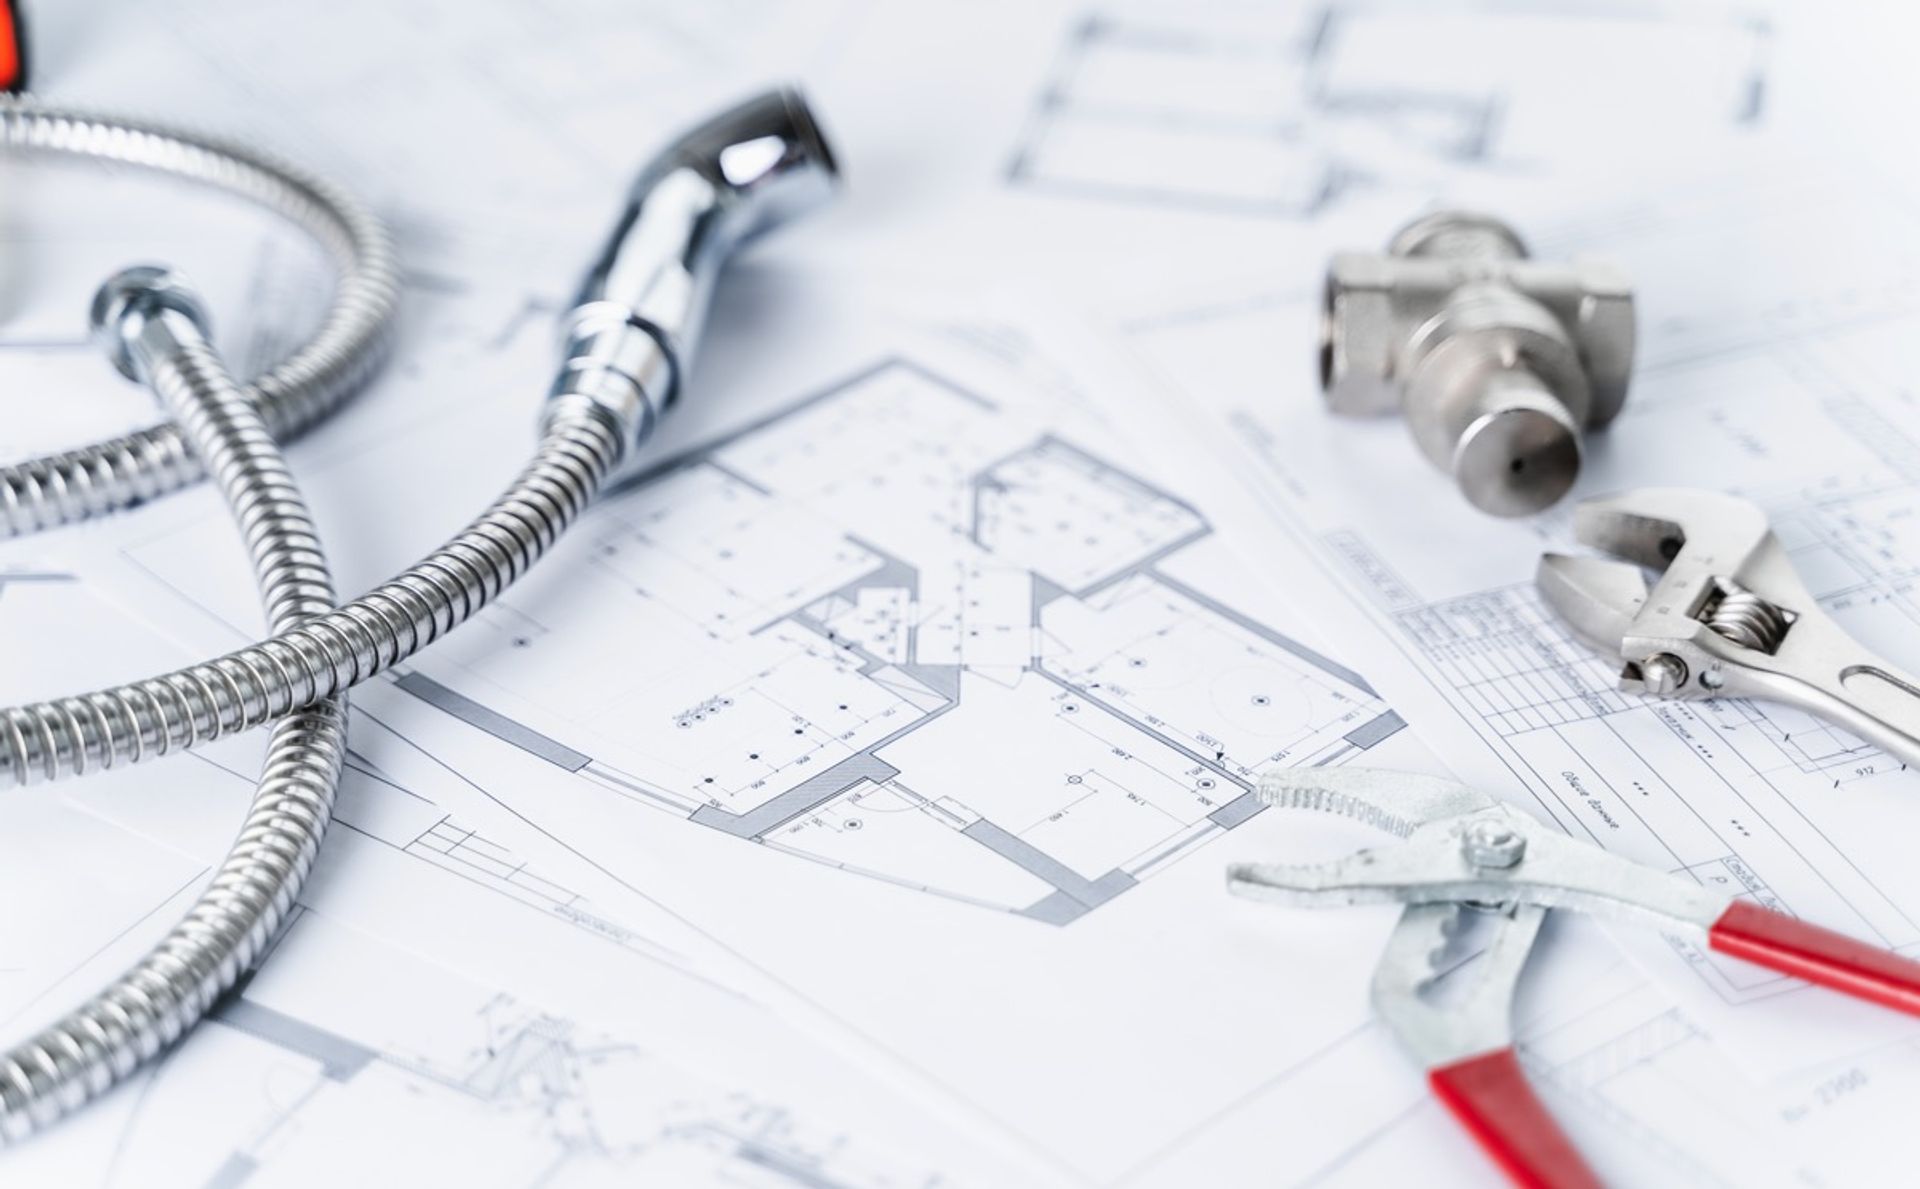 Plumbing Project In House Drawing Diagrams Plan Of 2023 11 27 05 24 39 Utc